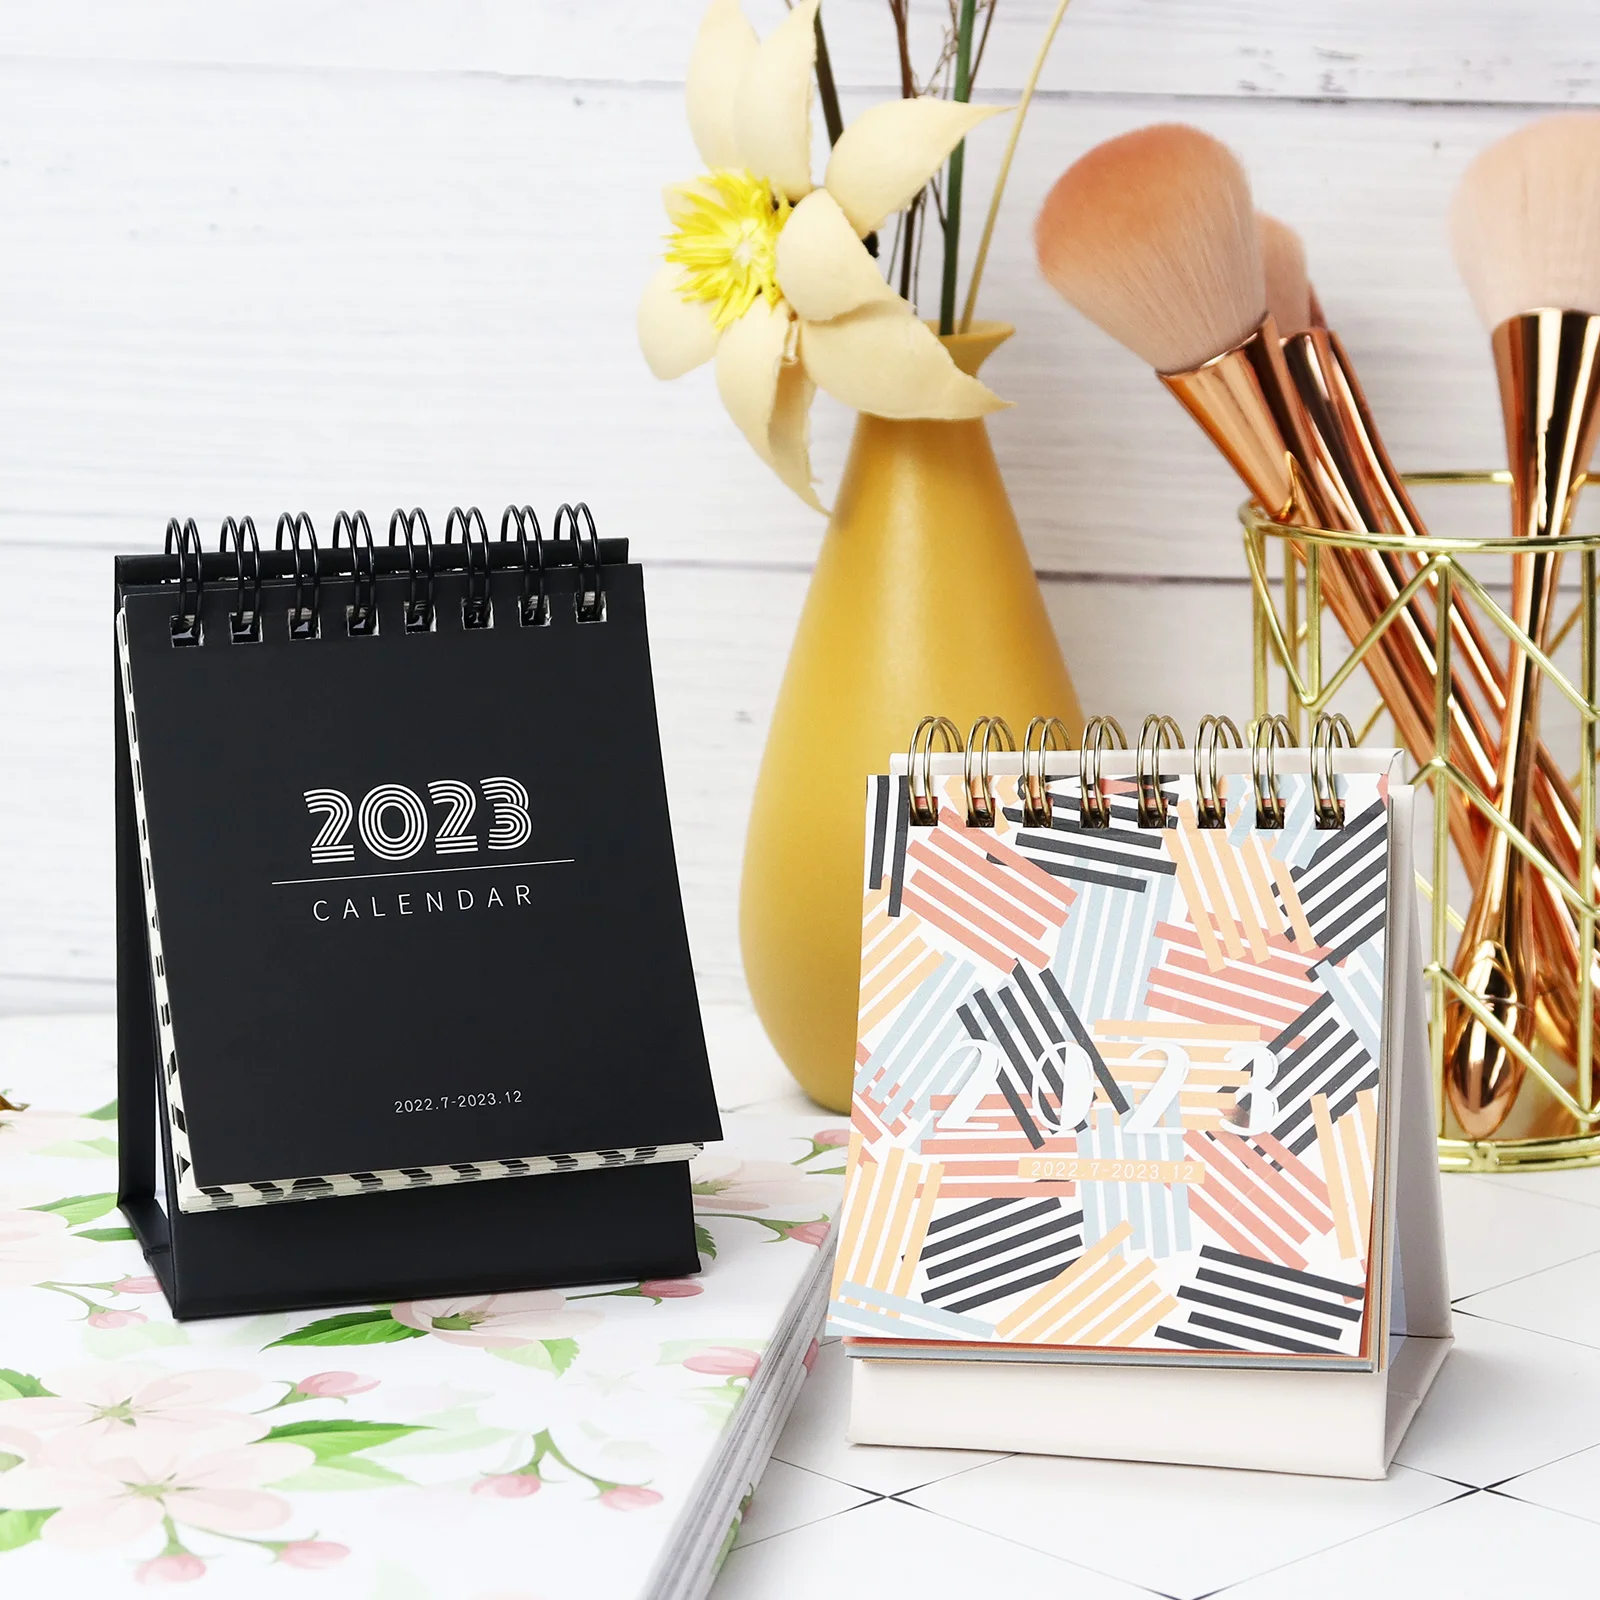 2022-2023 Calendar Agenda Planning Note Reminder Cute Mini Desktop Small Desk Calendar Stationery Supplies 2Pcs/Pack